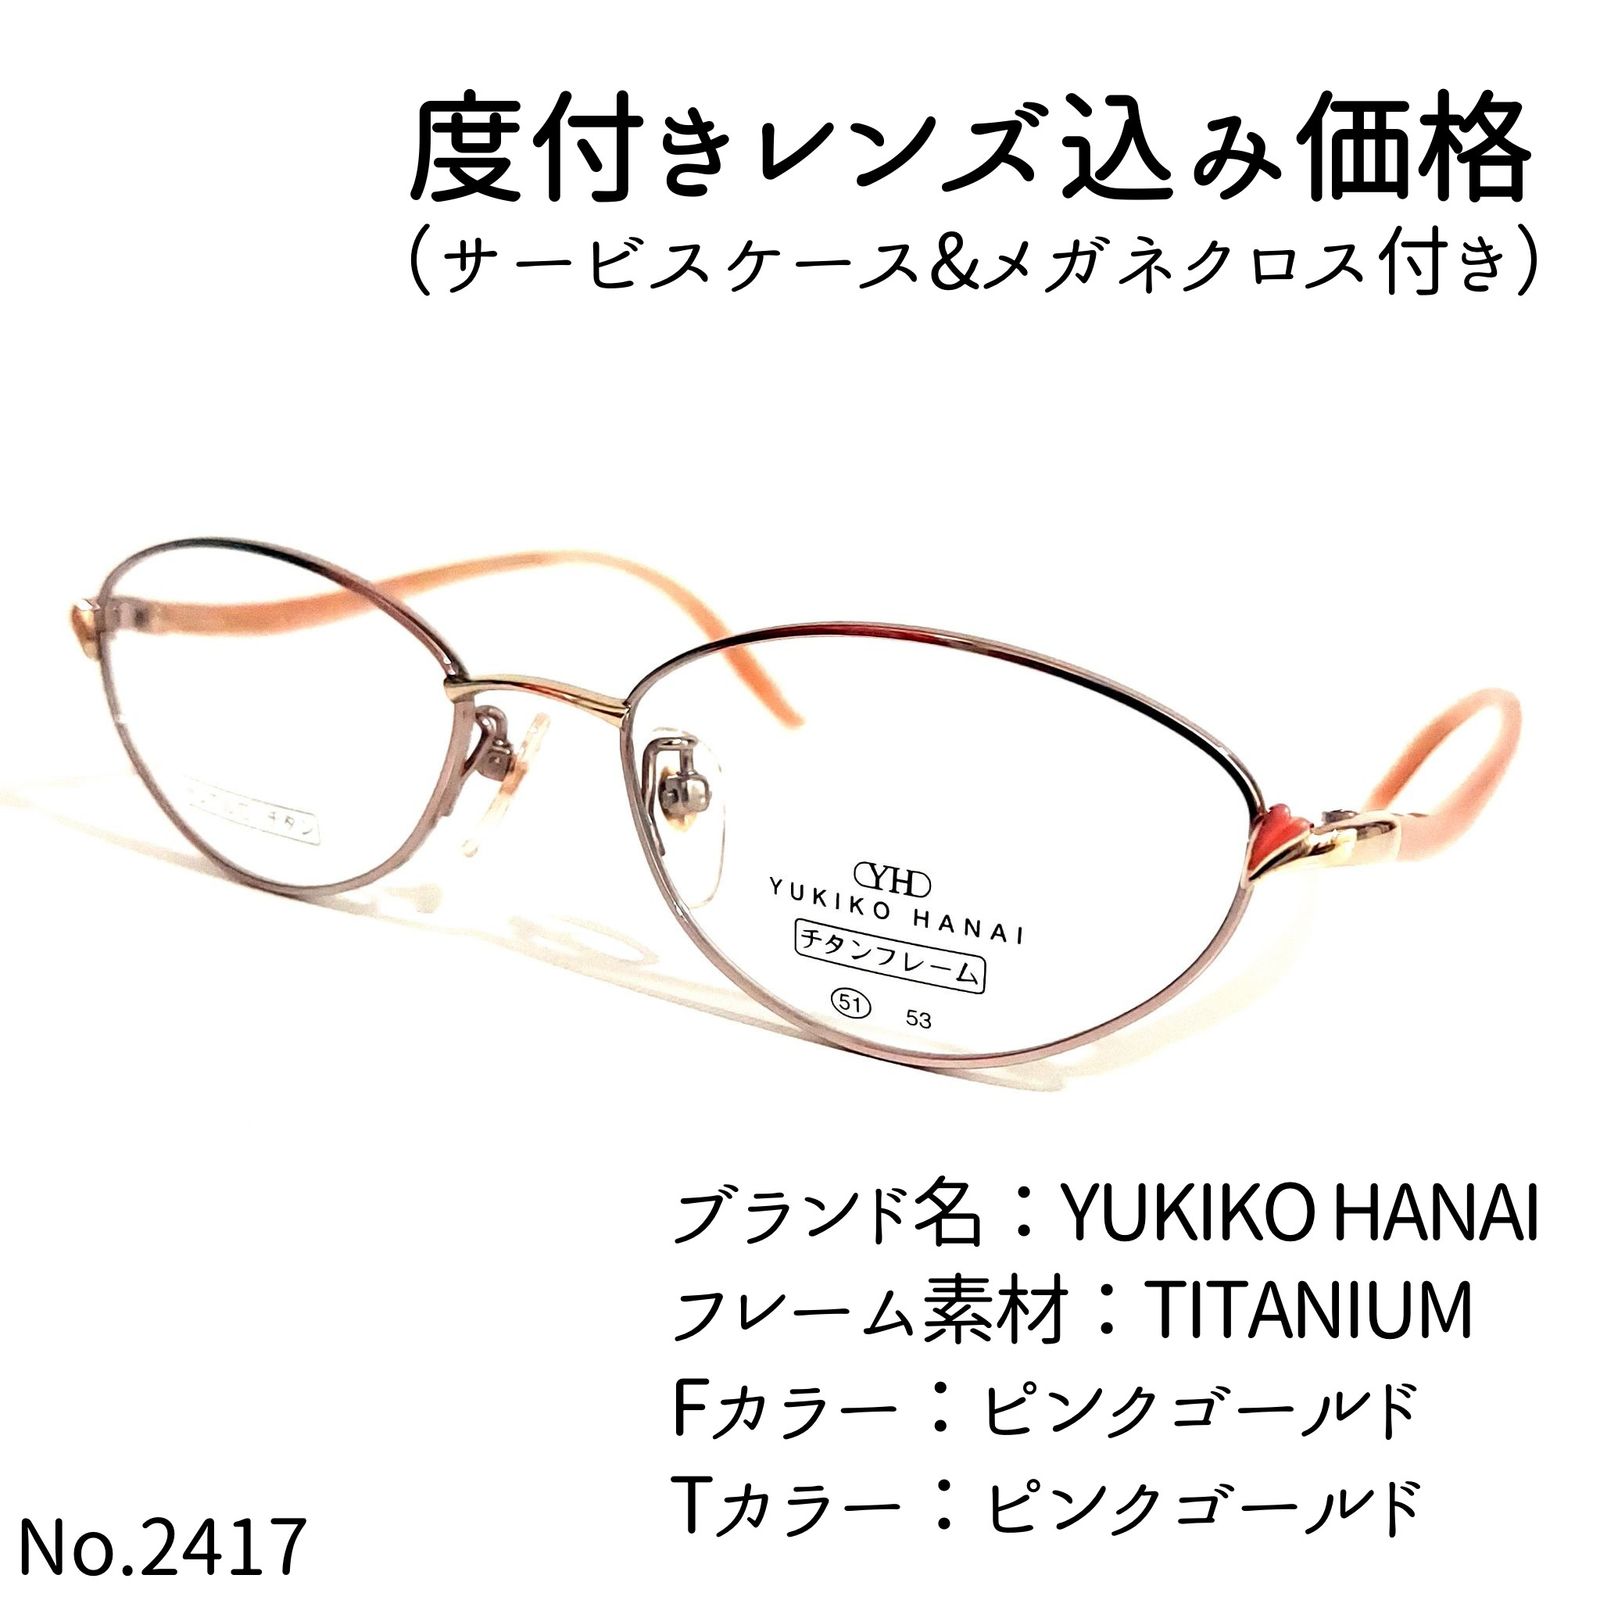 No.2417+メガネ YUKIKO HANAI【度数入り込み価格】 - サングラス/メガネ